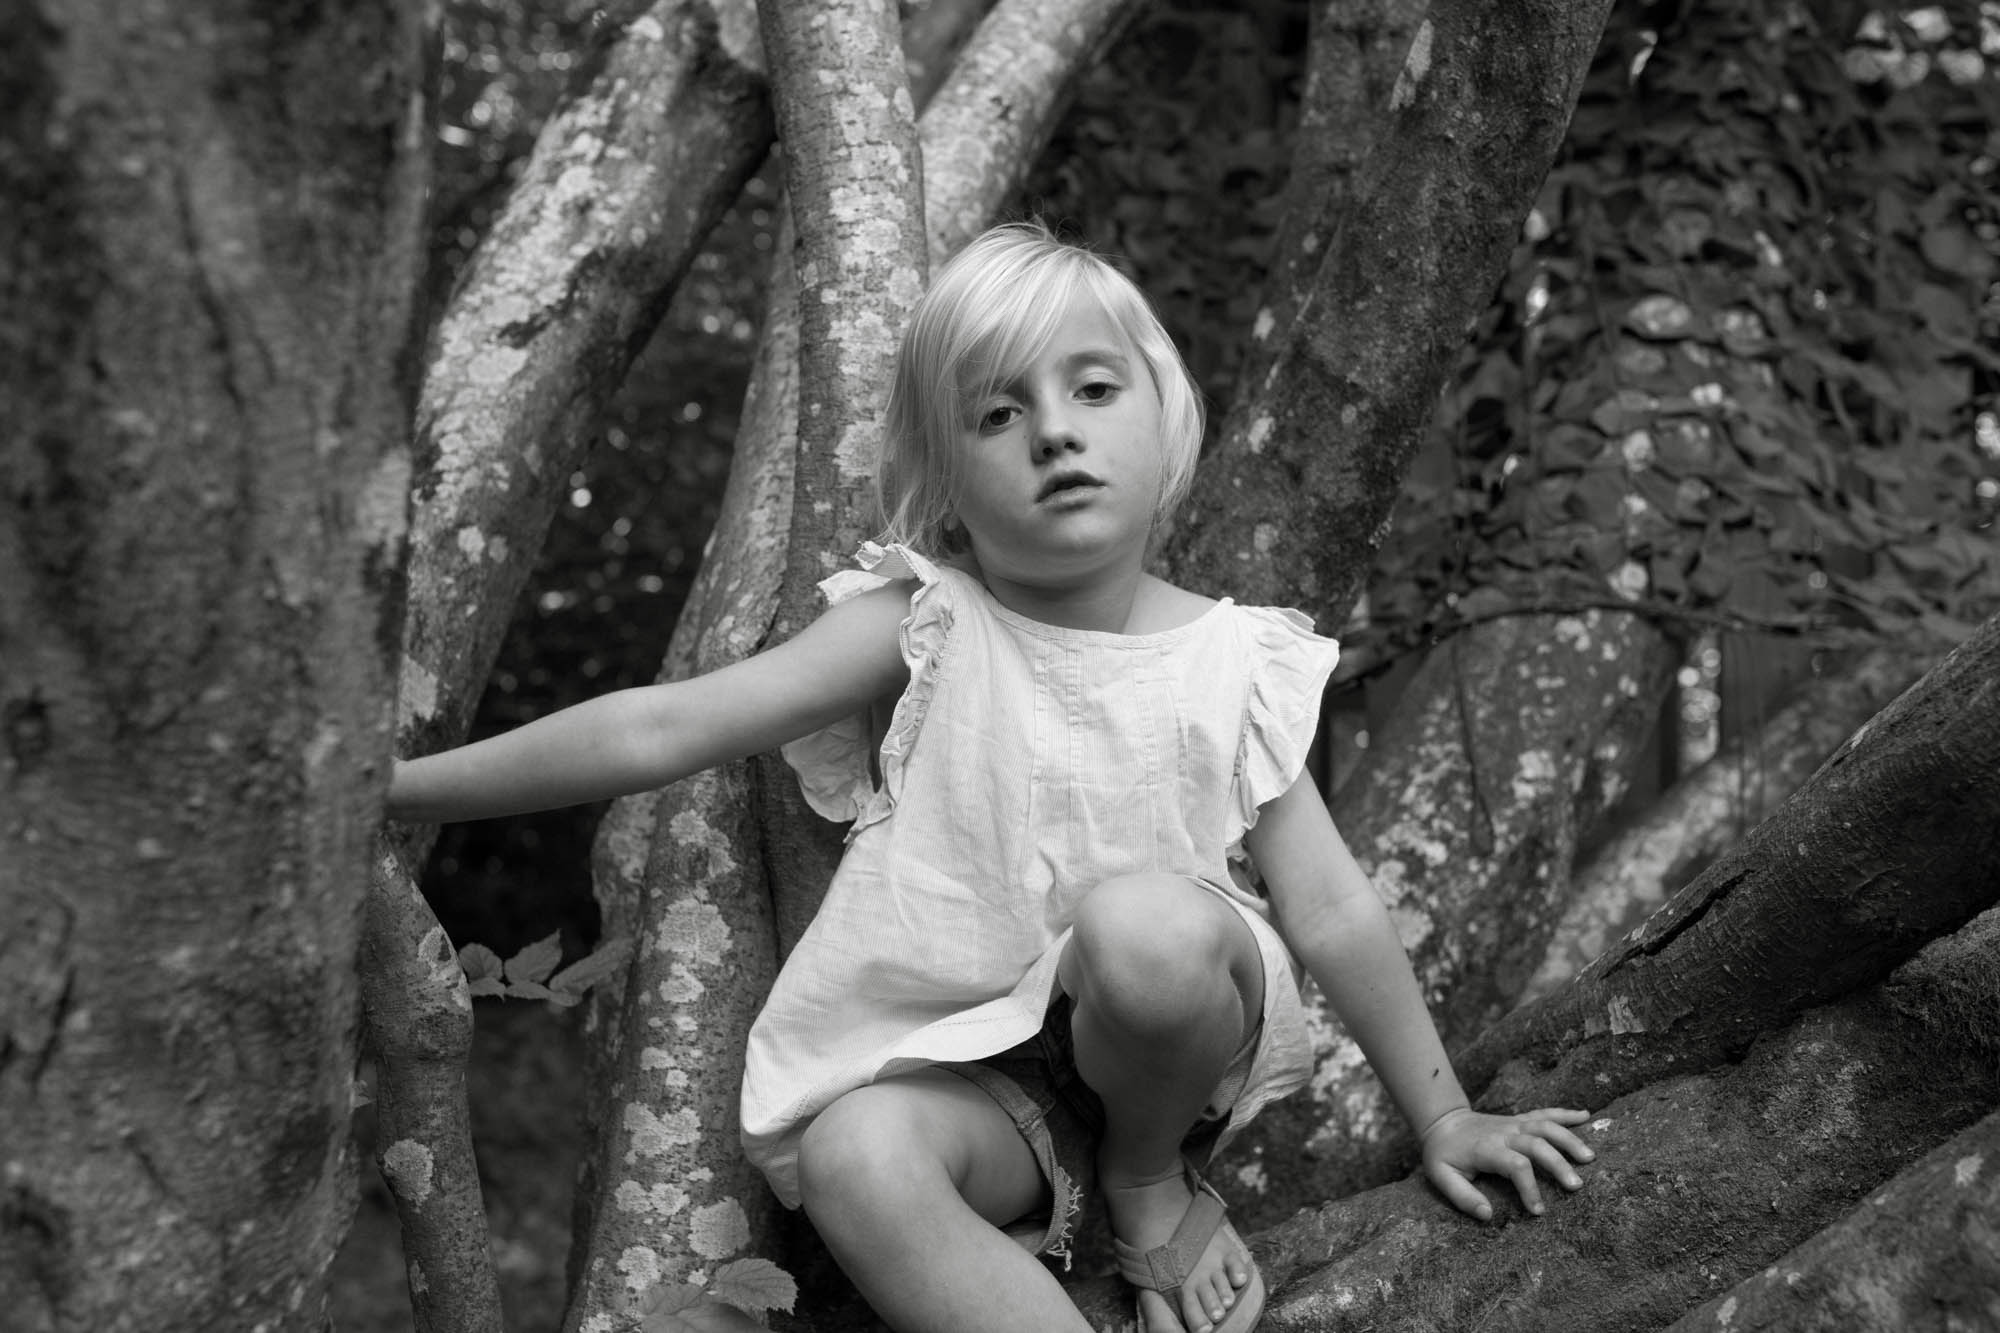 B&W childrens portrait photographer